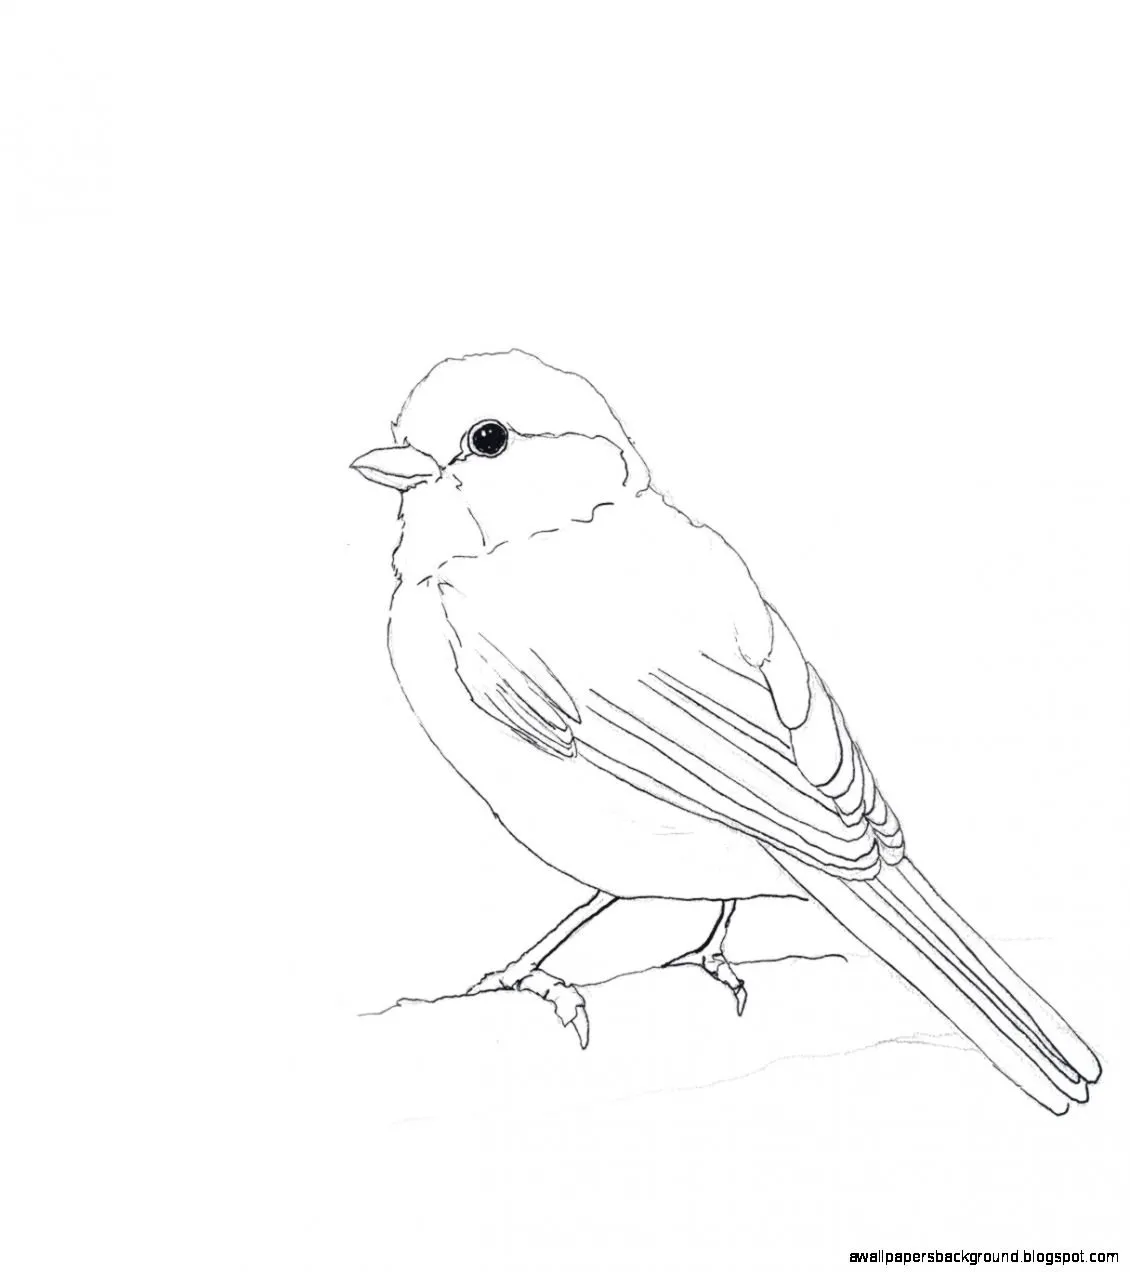 Птица рисунок. Рисунки птиц для срисовки. Птичка рисунок карандашом. Рисунок птички карандашом для срисовки. Рисунок птиц карандашом легкие